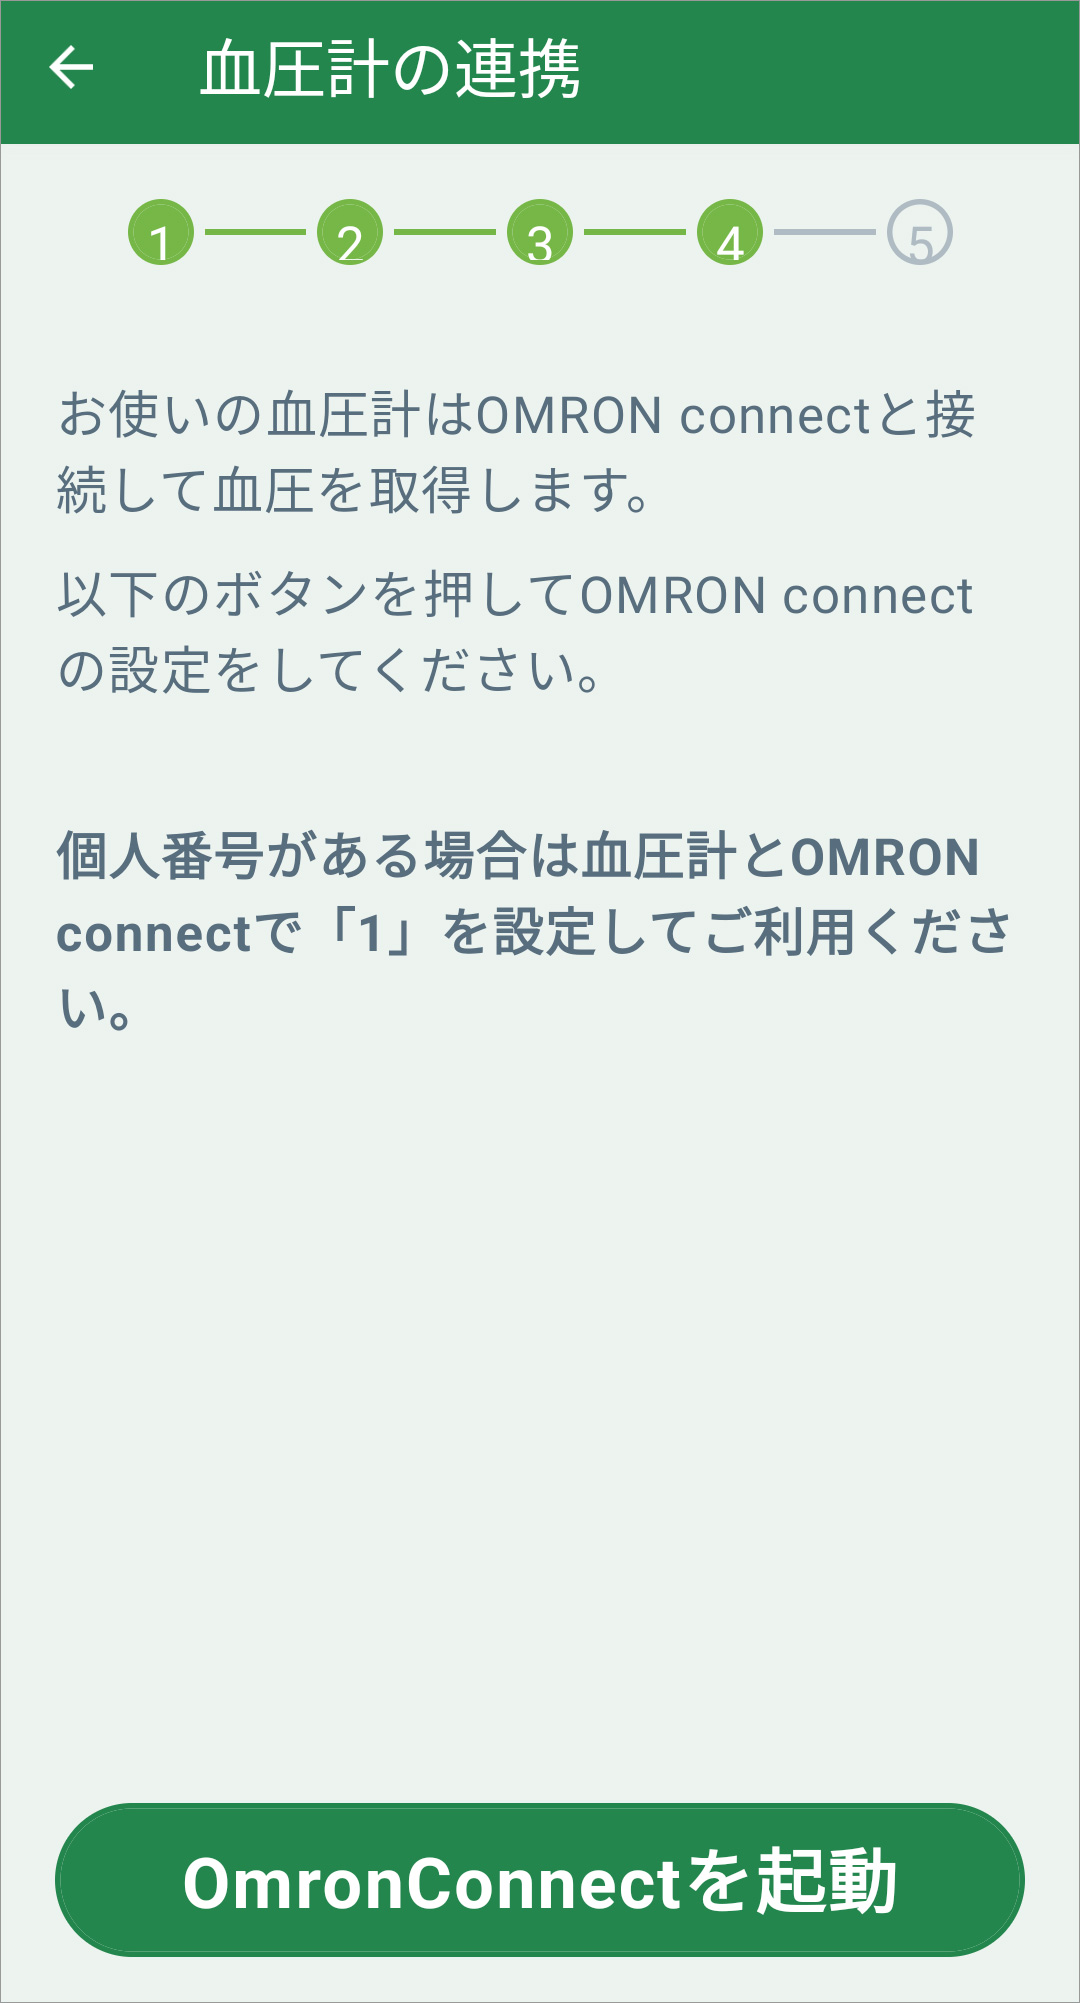 _________________AndroidOmronconnect___.jpg